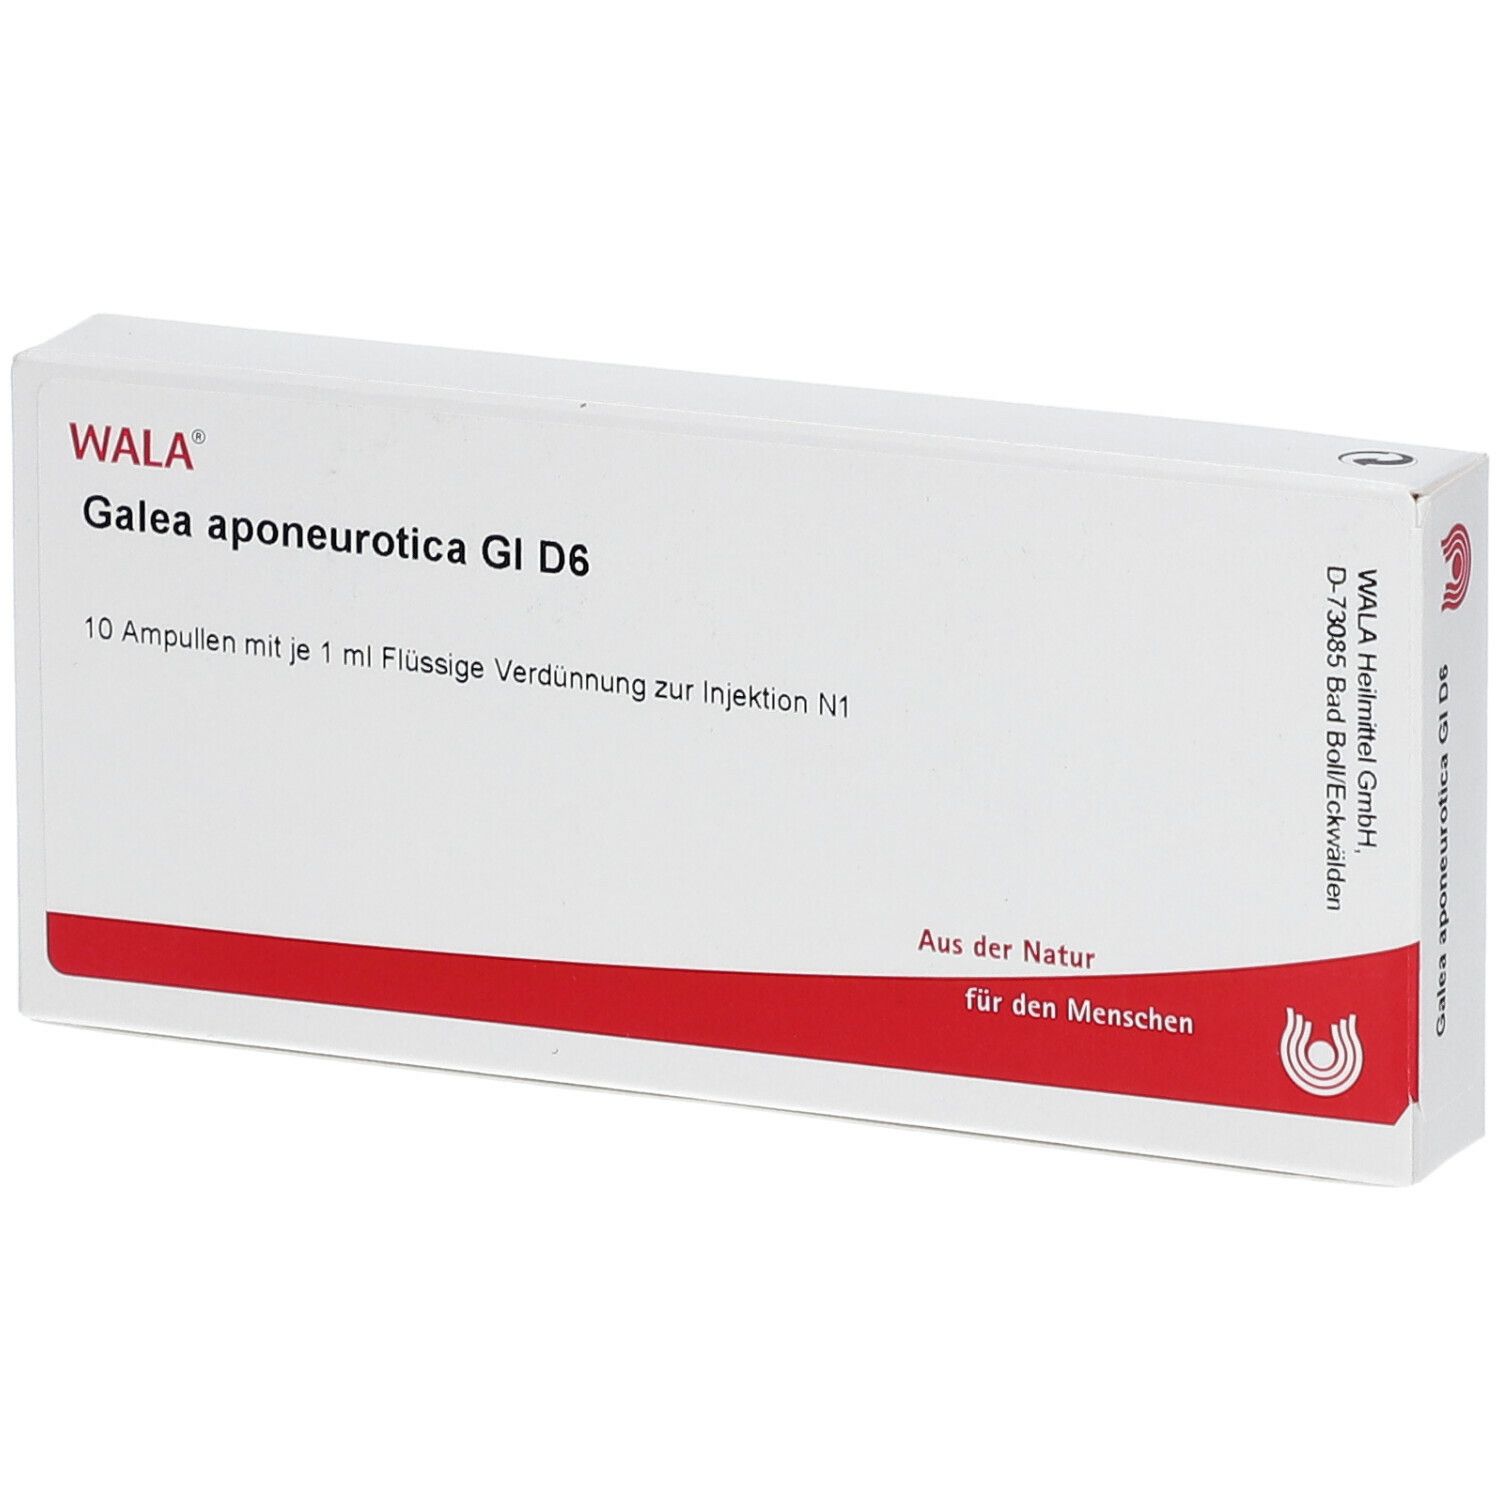 Wala® Galea aponeurotica Gl D 6